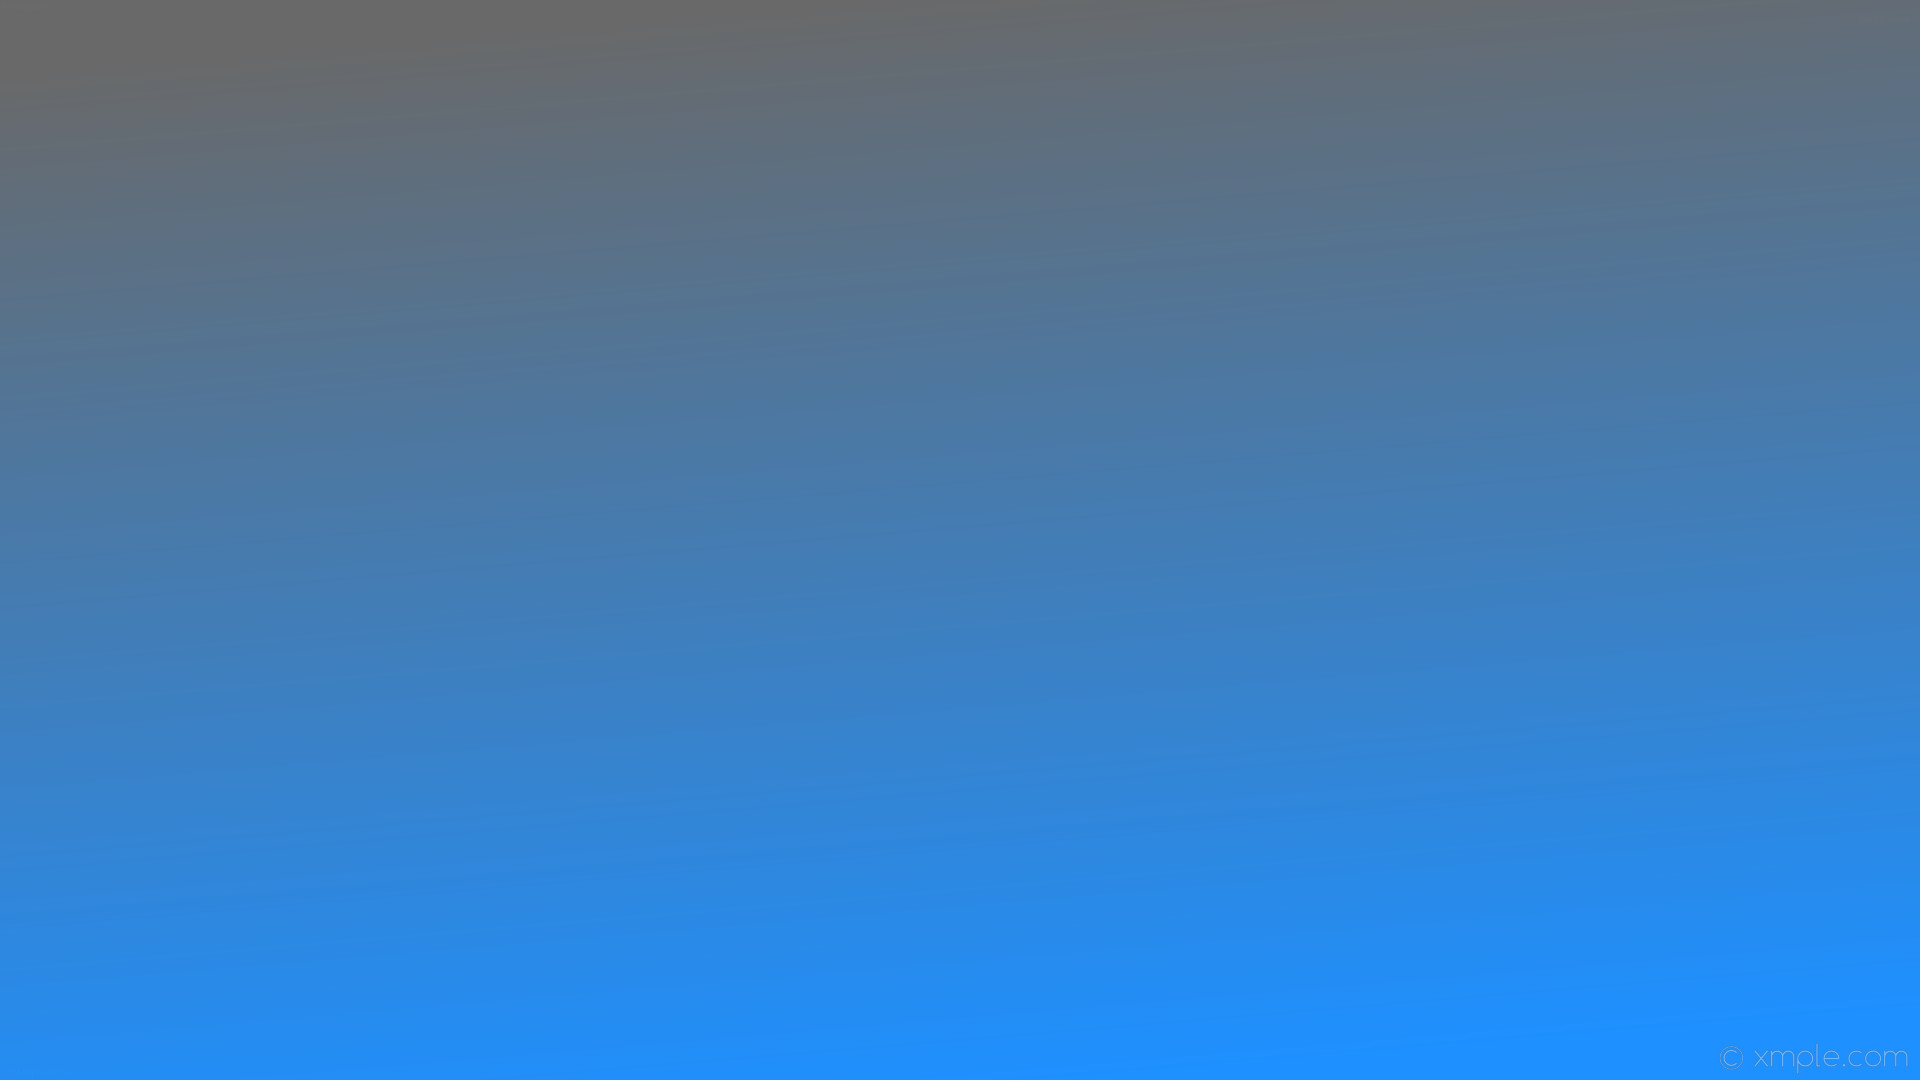 1920x1080 wallpaper blue grey gradient linear dodger blue dim gray #1e90ff #696969  285Â°